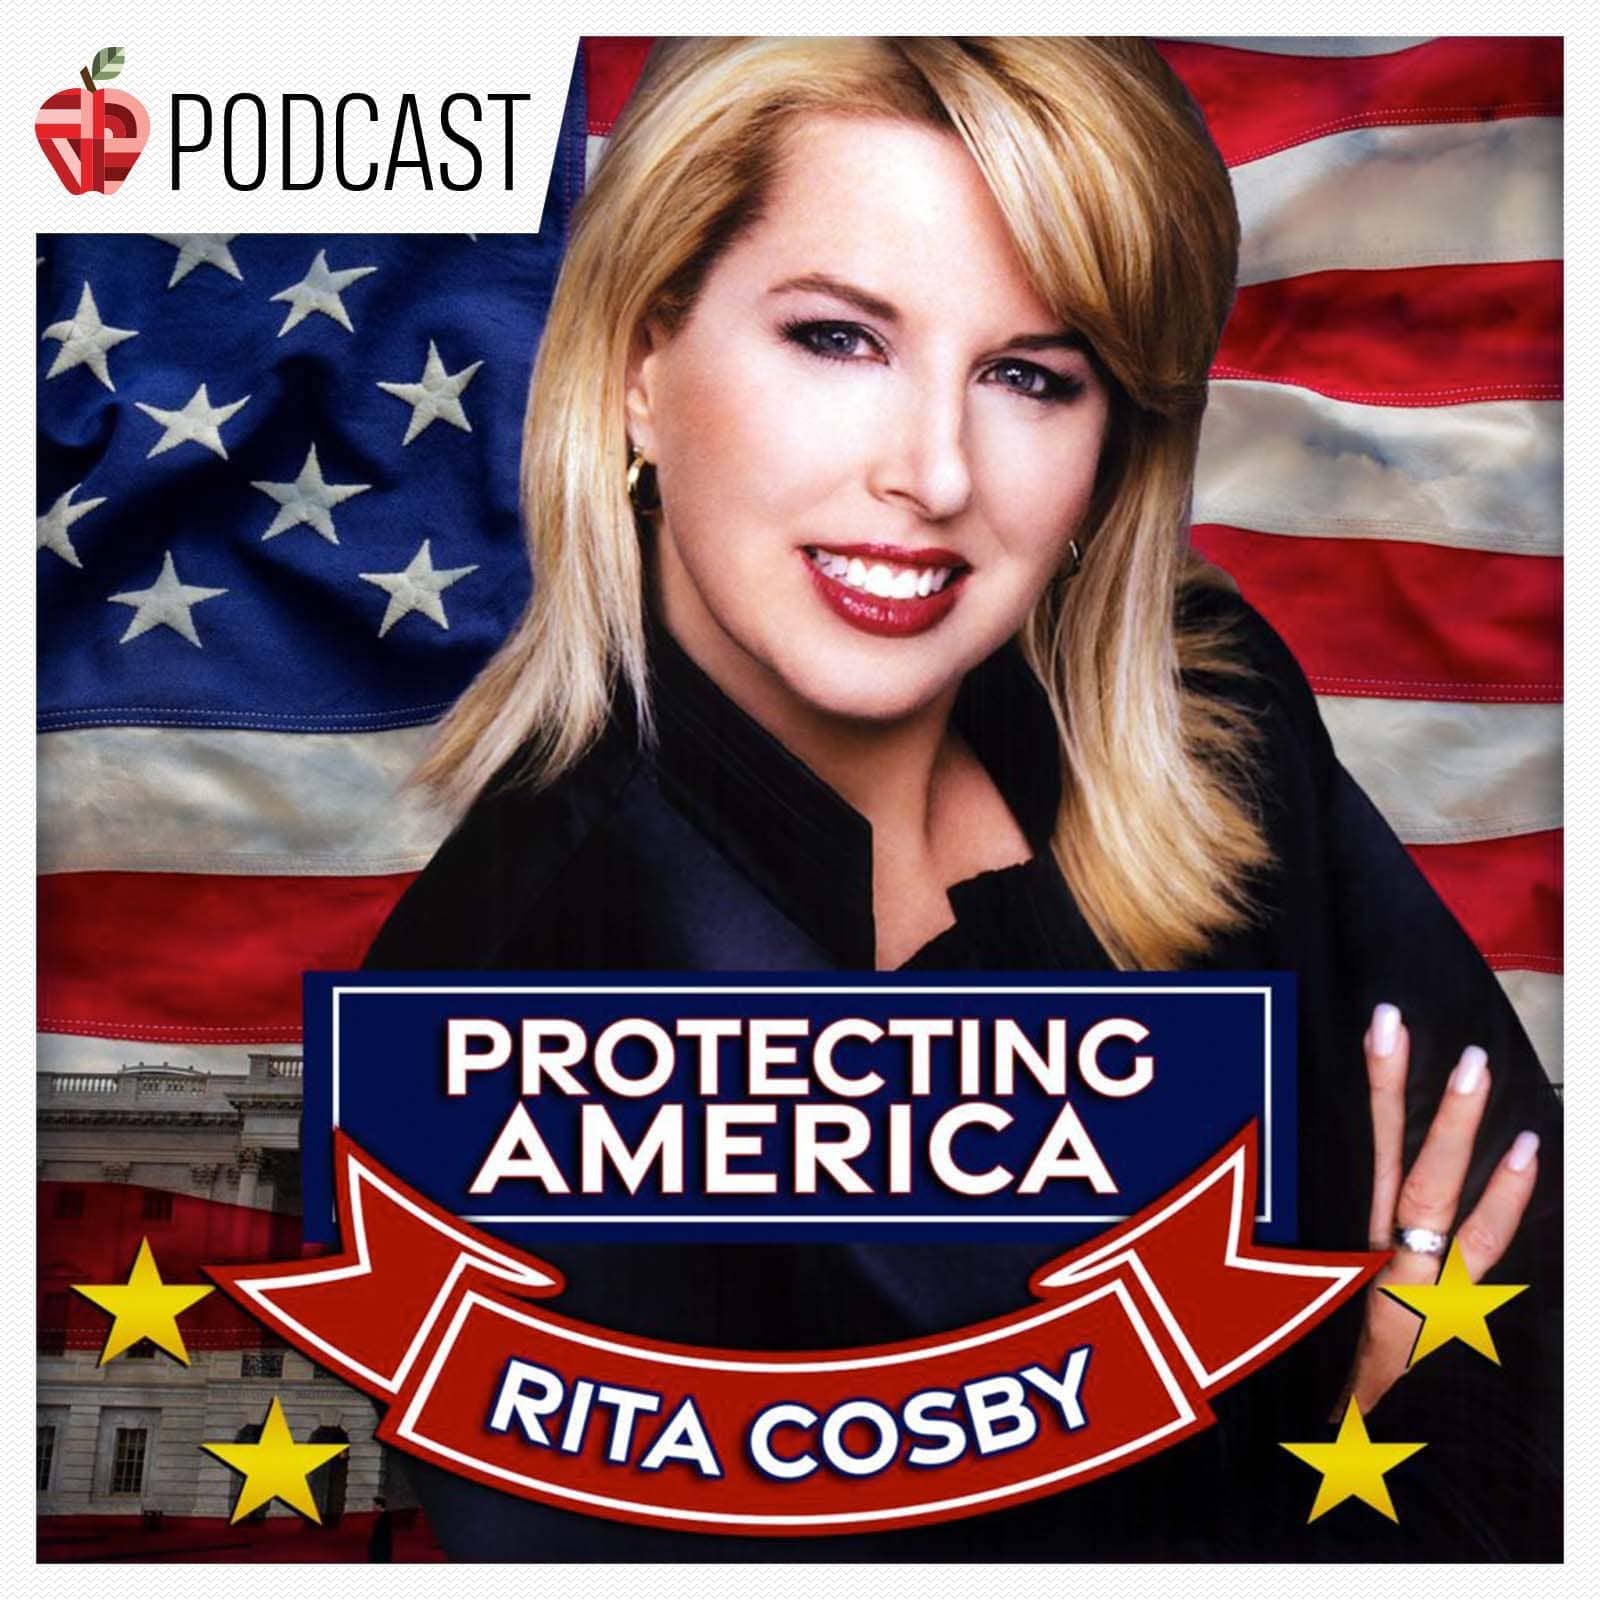 rita-cosby-protecting-america-correct-podcast-new-logo-23